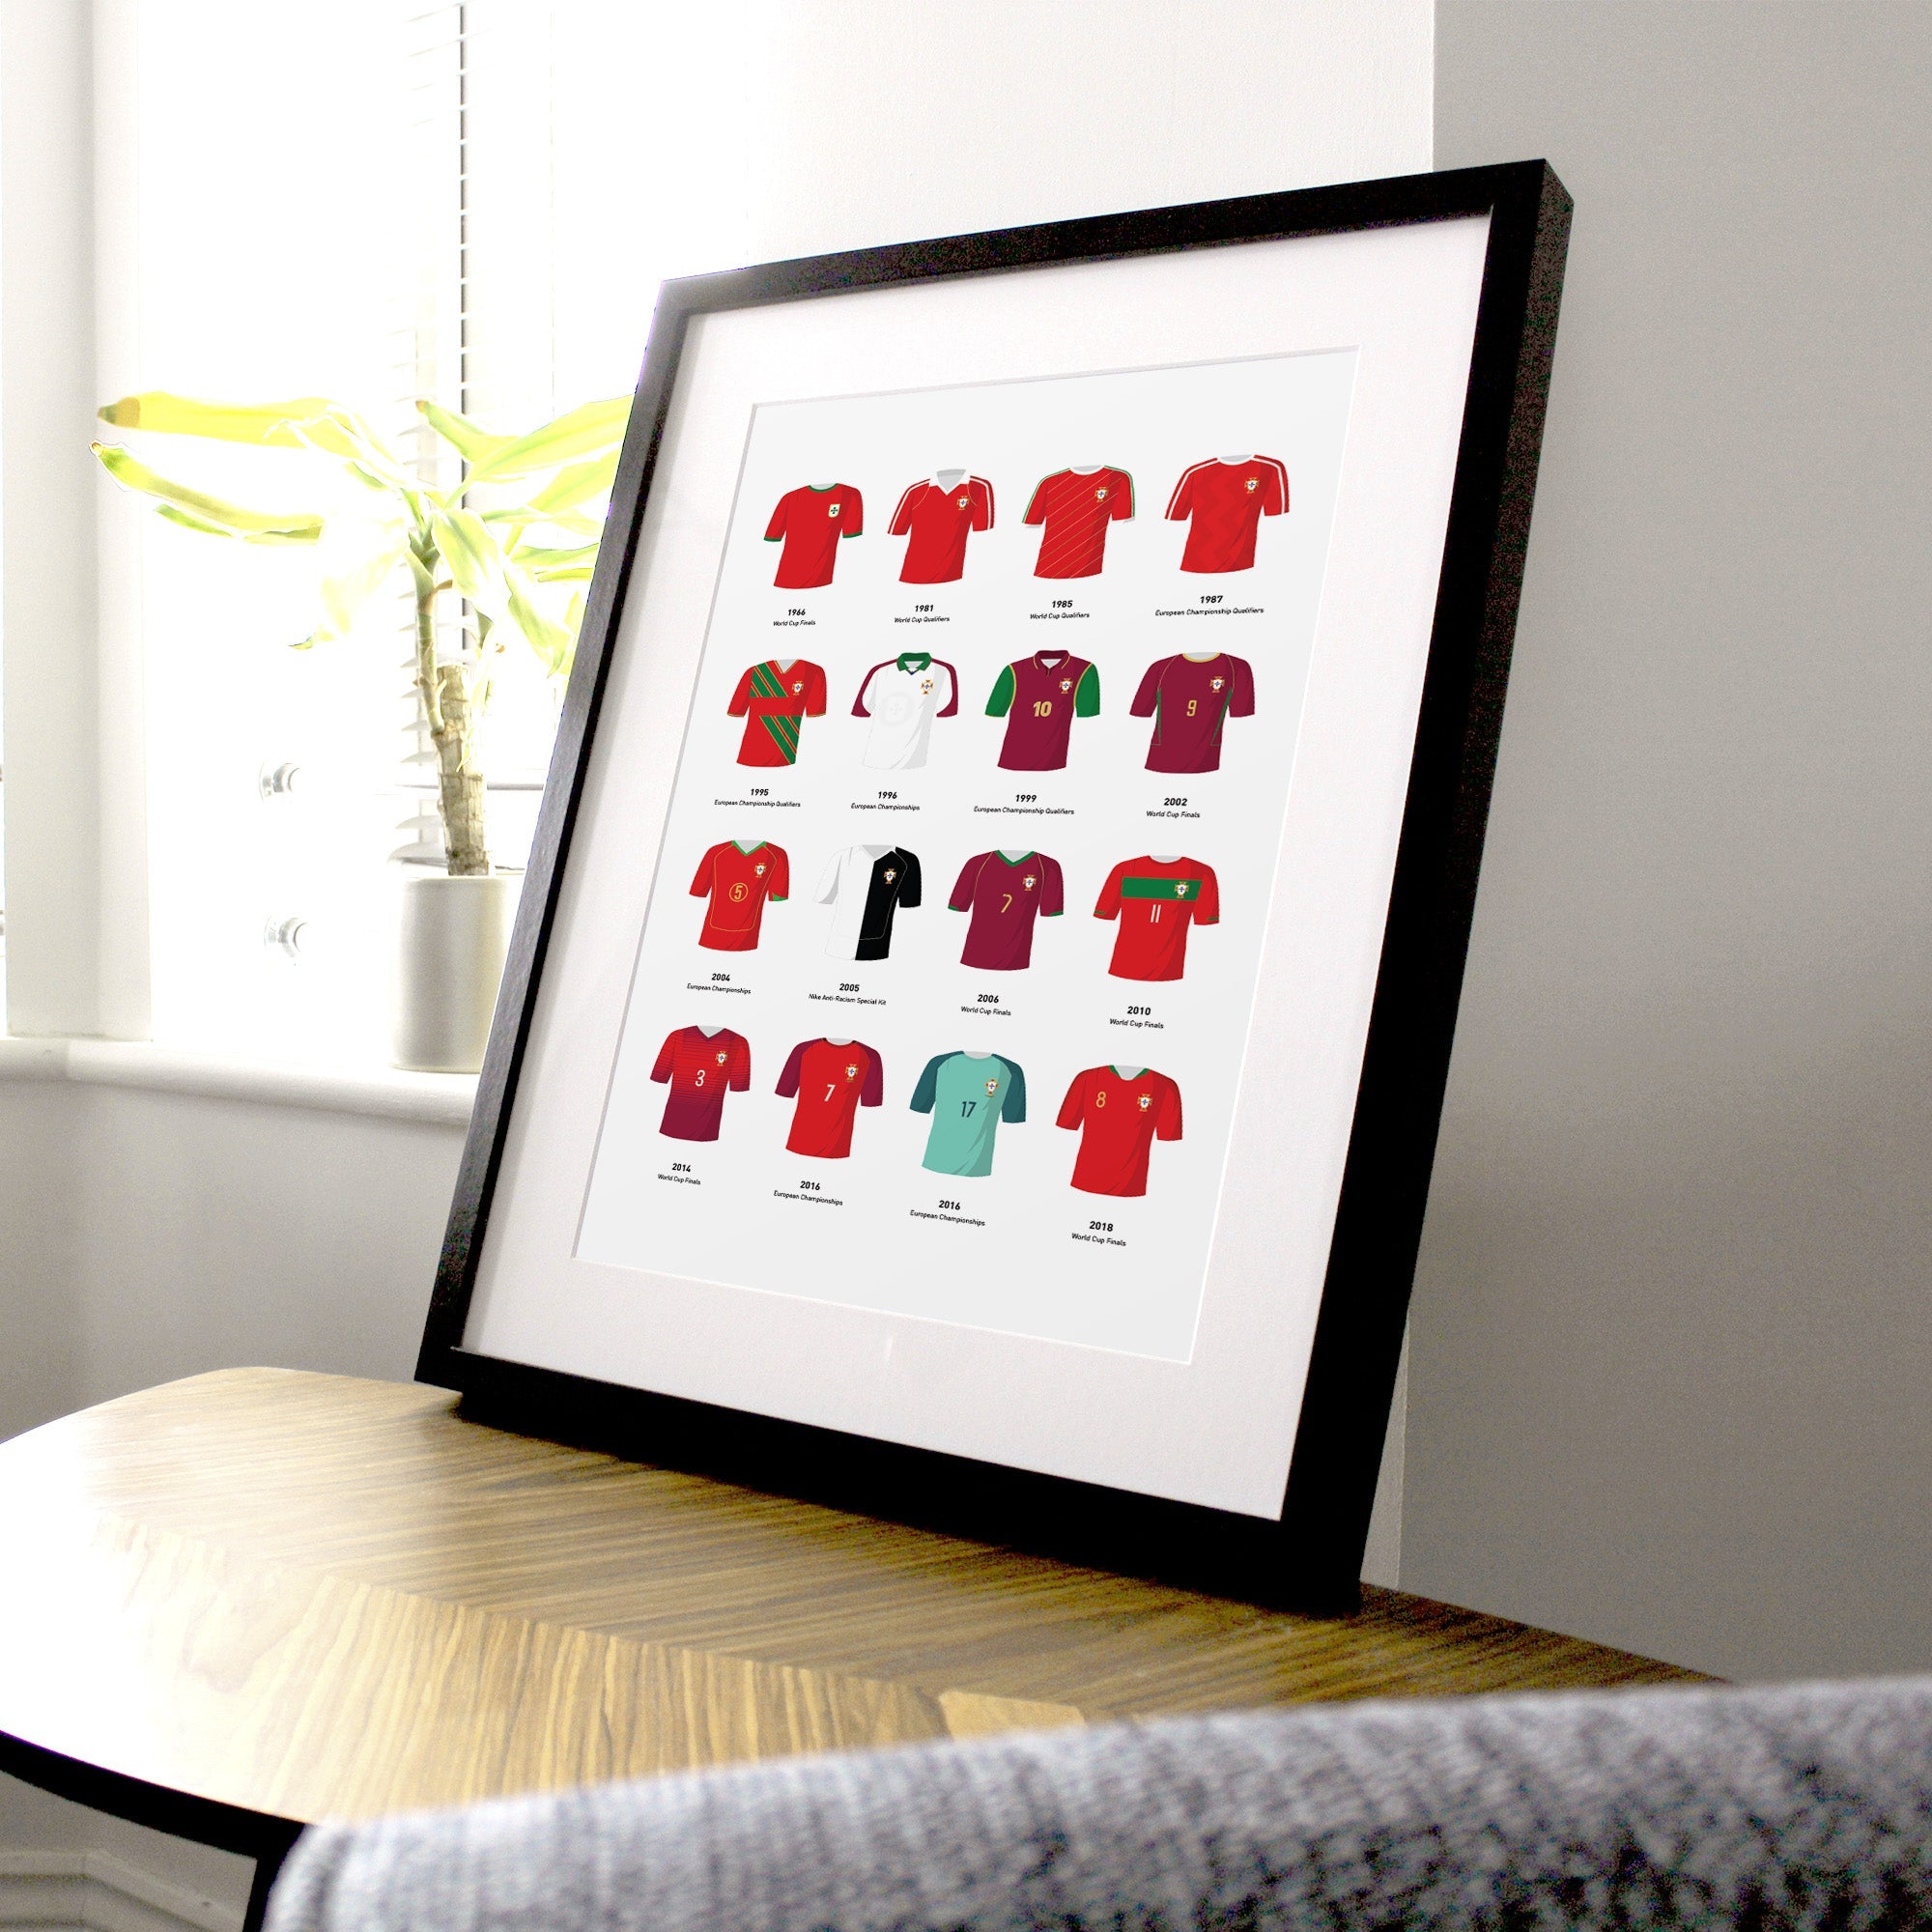 Portugal Classic Kits Football Team Print Good Team On Paper